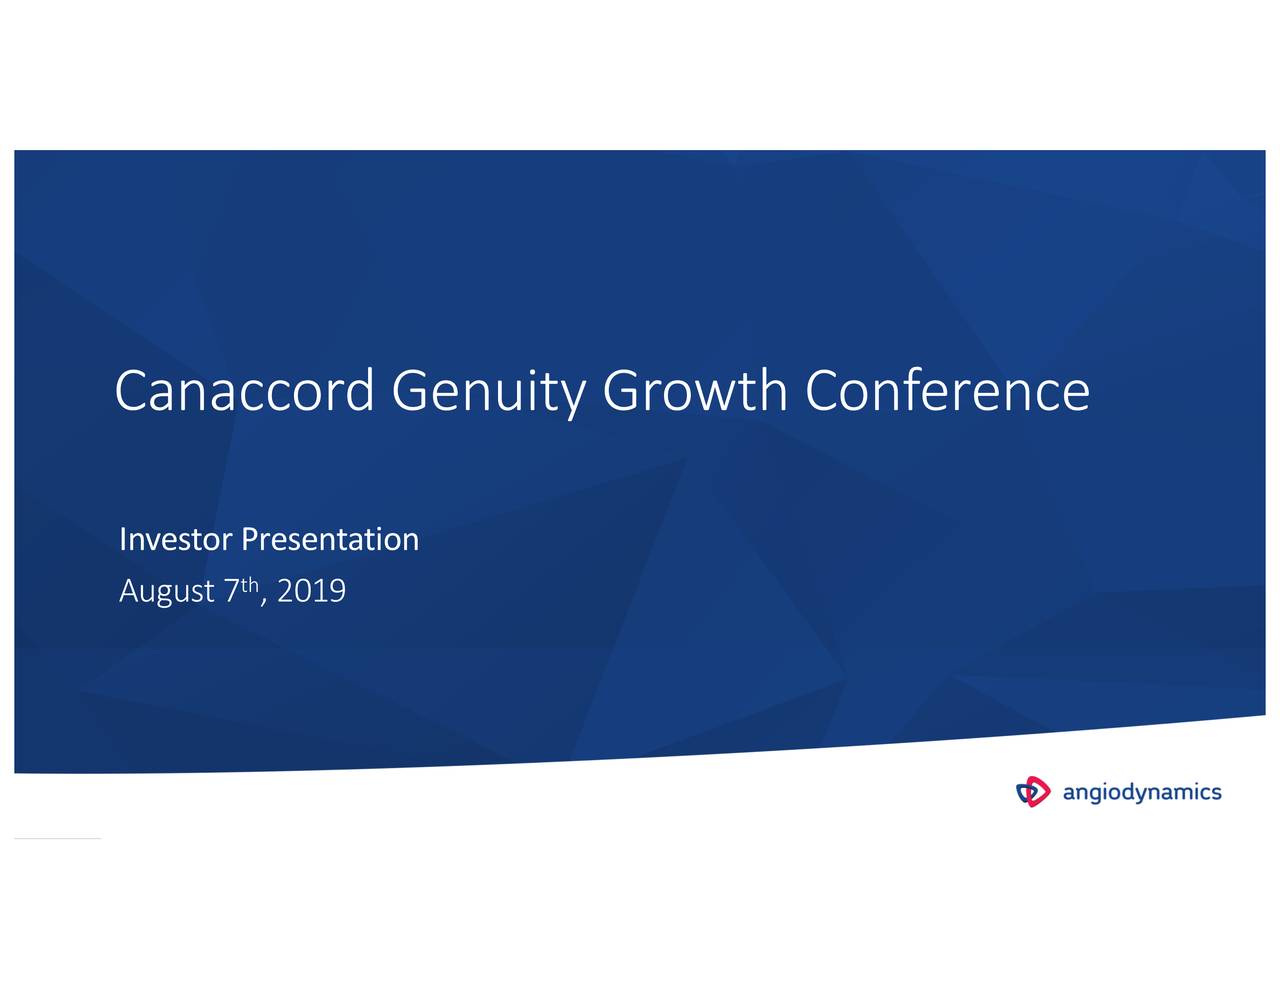 AngioDynamics (ANGO) Presents At Canaccord Genuity Growth Conference